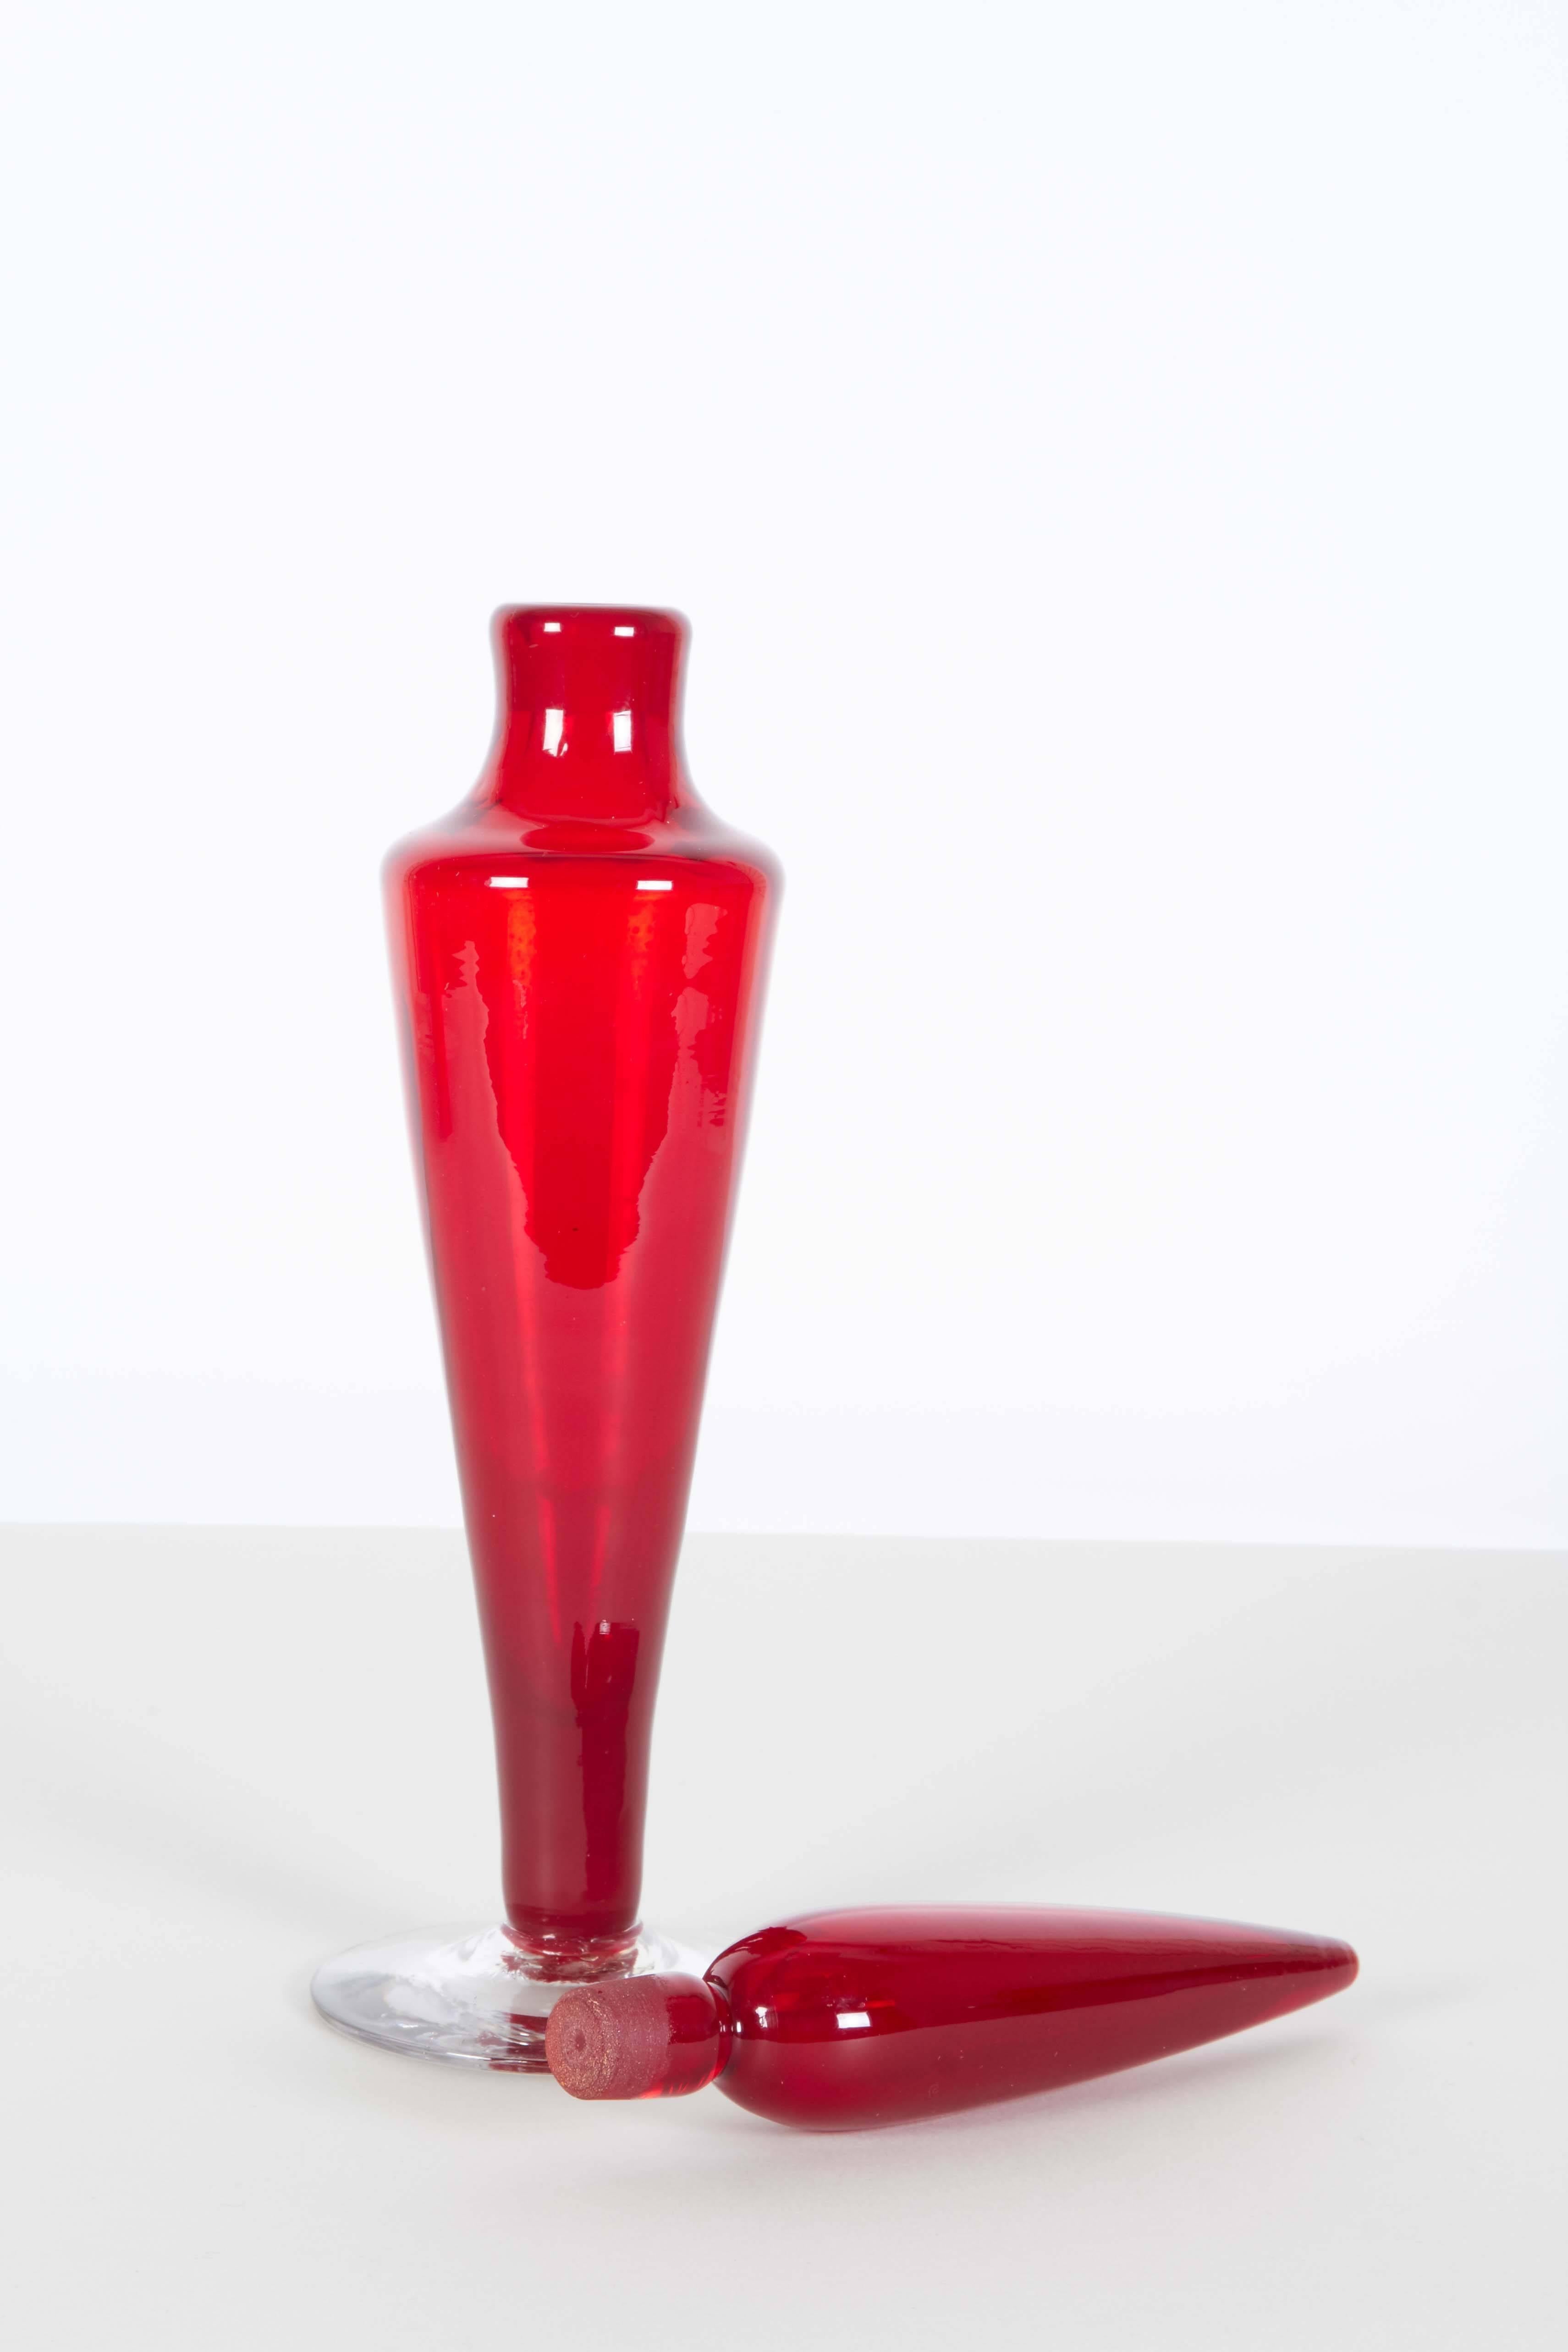 American Blenko 'Regal' Red Blown Glass Decanter